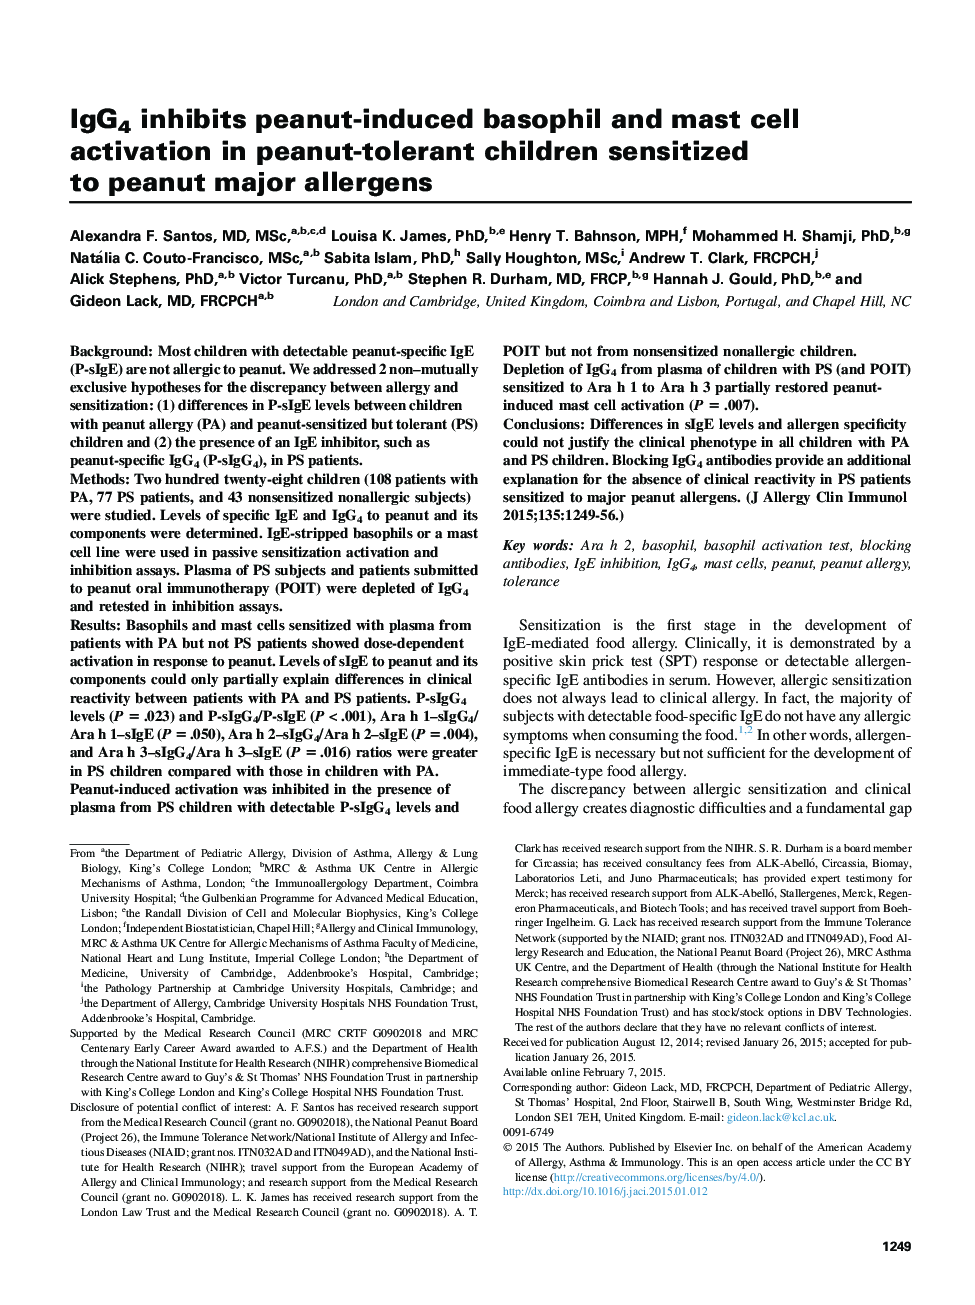 IgG4 inhibits peanut-induced basophil and mast cell activation in peanut-tolerant children sensitized to peanut major allergens